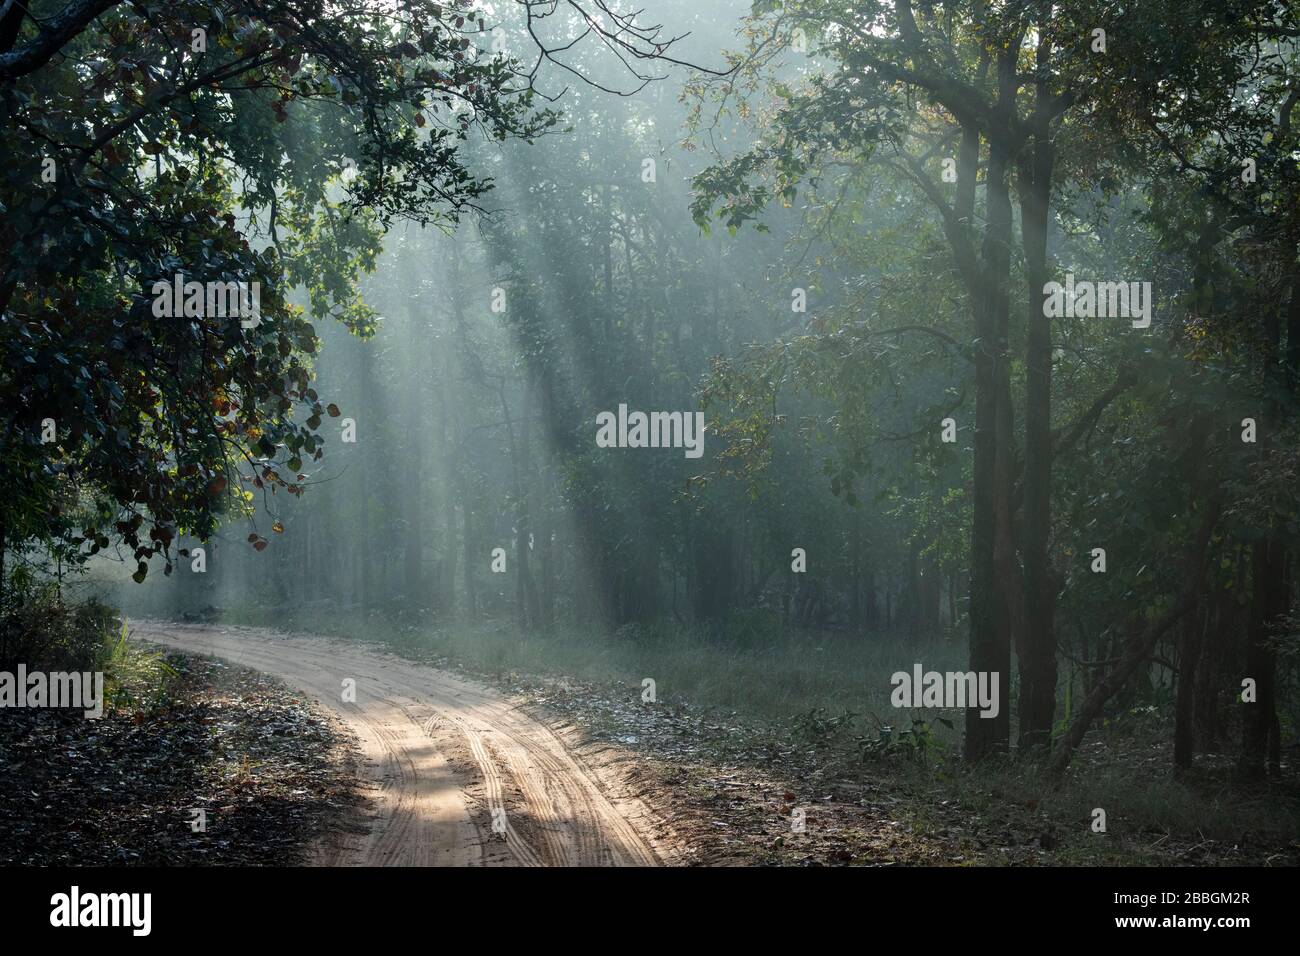 India, Madhya Pradesh, Bandhavgarh National Park. Early morning sunbeams (Crepuscular rays) streaming through park forest on dirt road. Stock Photo